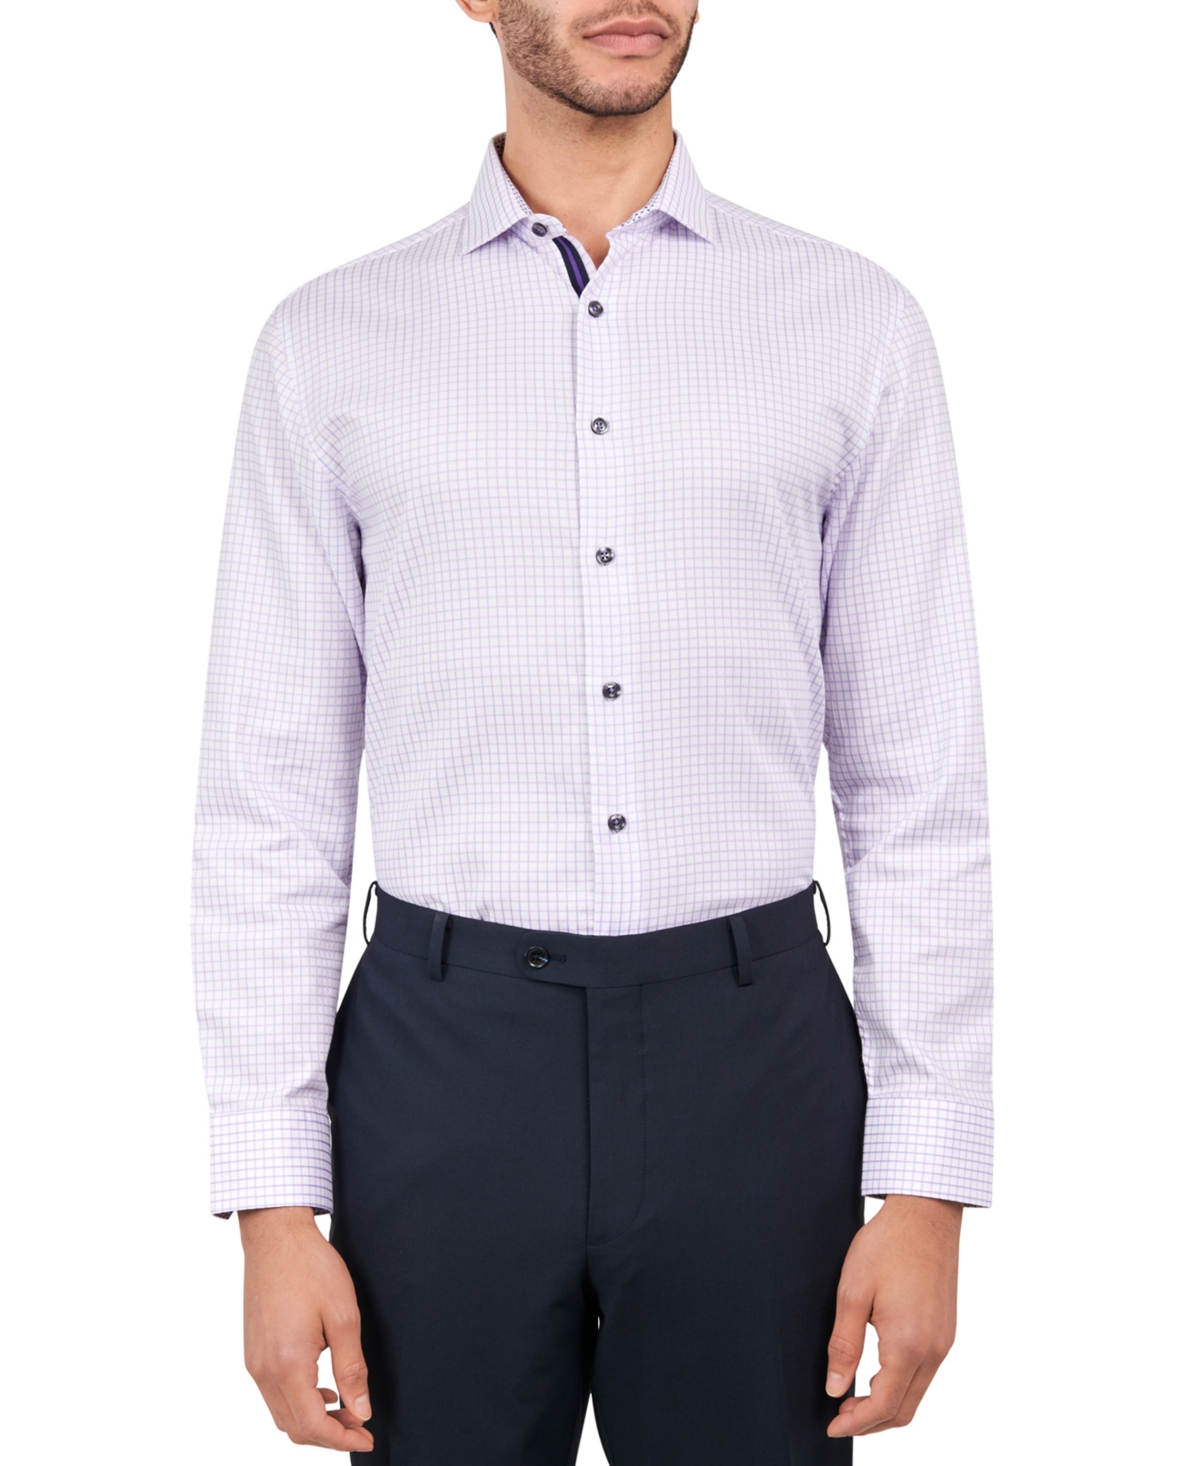 Men's Mini-Check Dress Shirt - Lilac